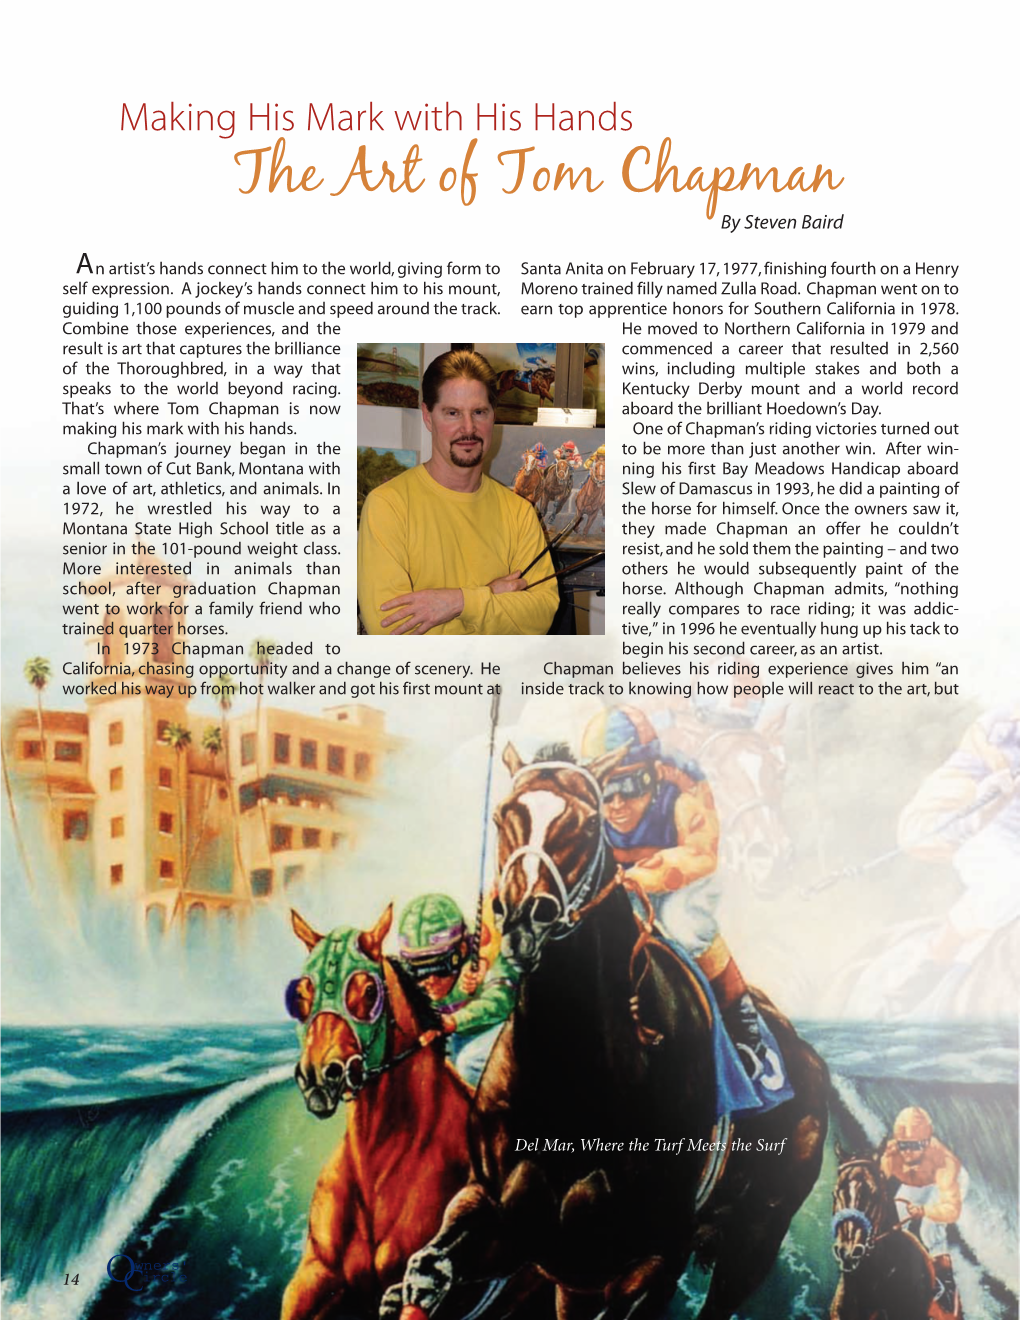 The Art of Tom Chapman by Steven Baird